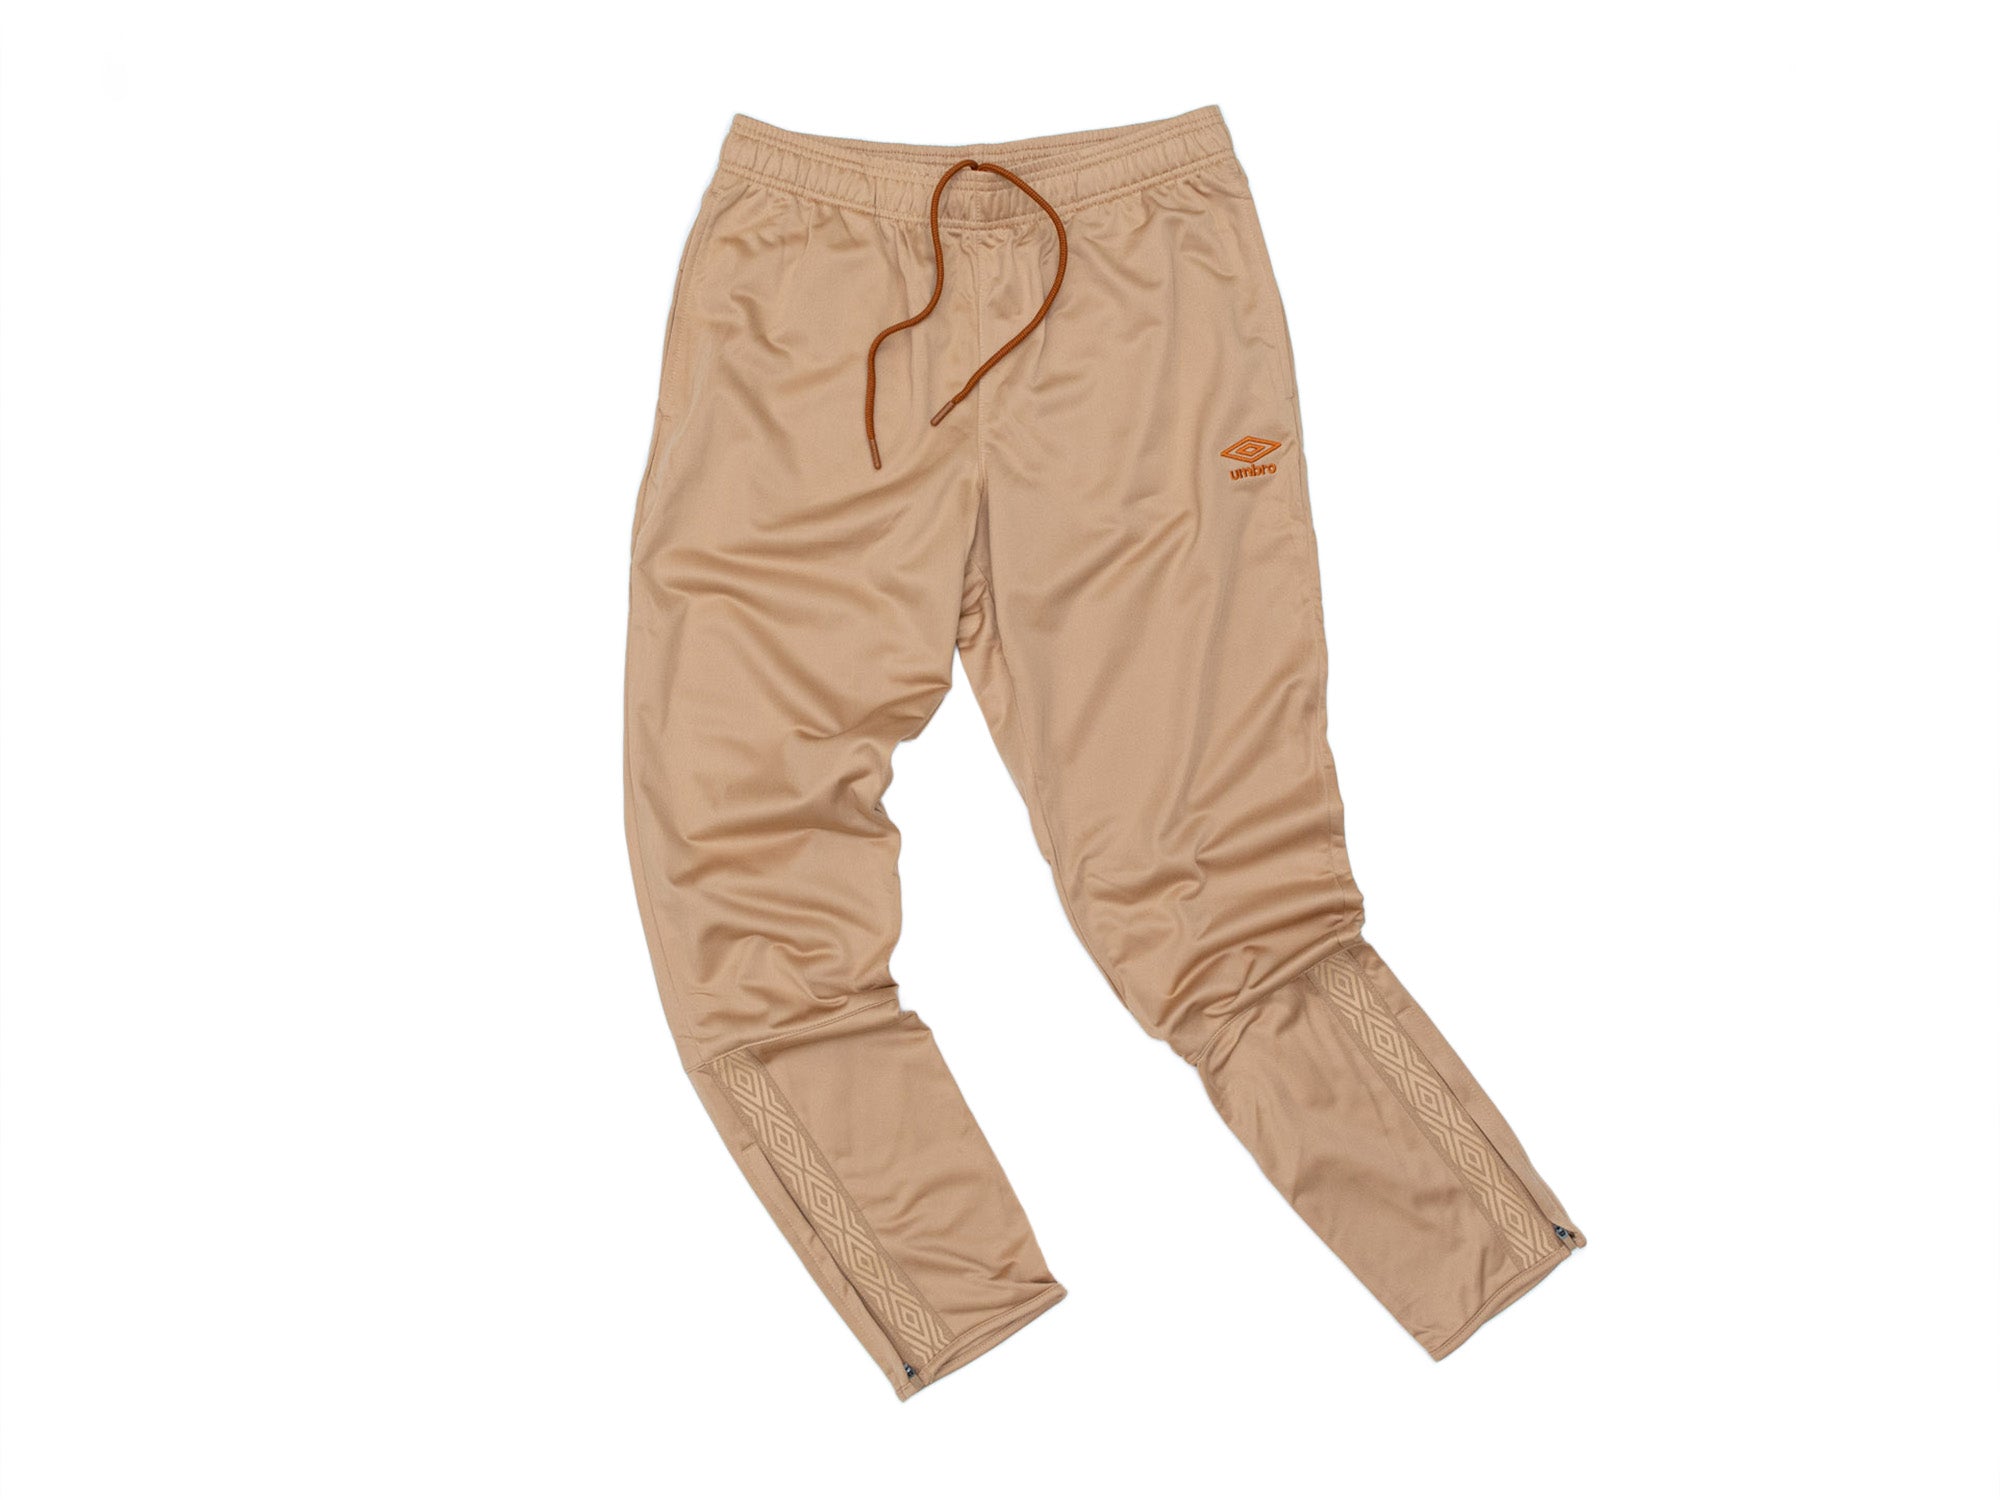 Umbro Relaxed Sweat Pants for Men | Mercari